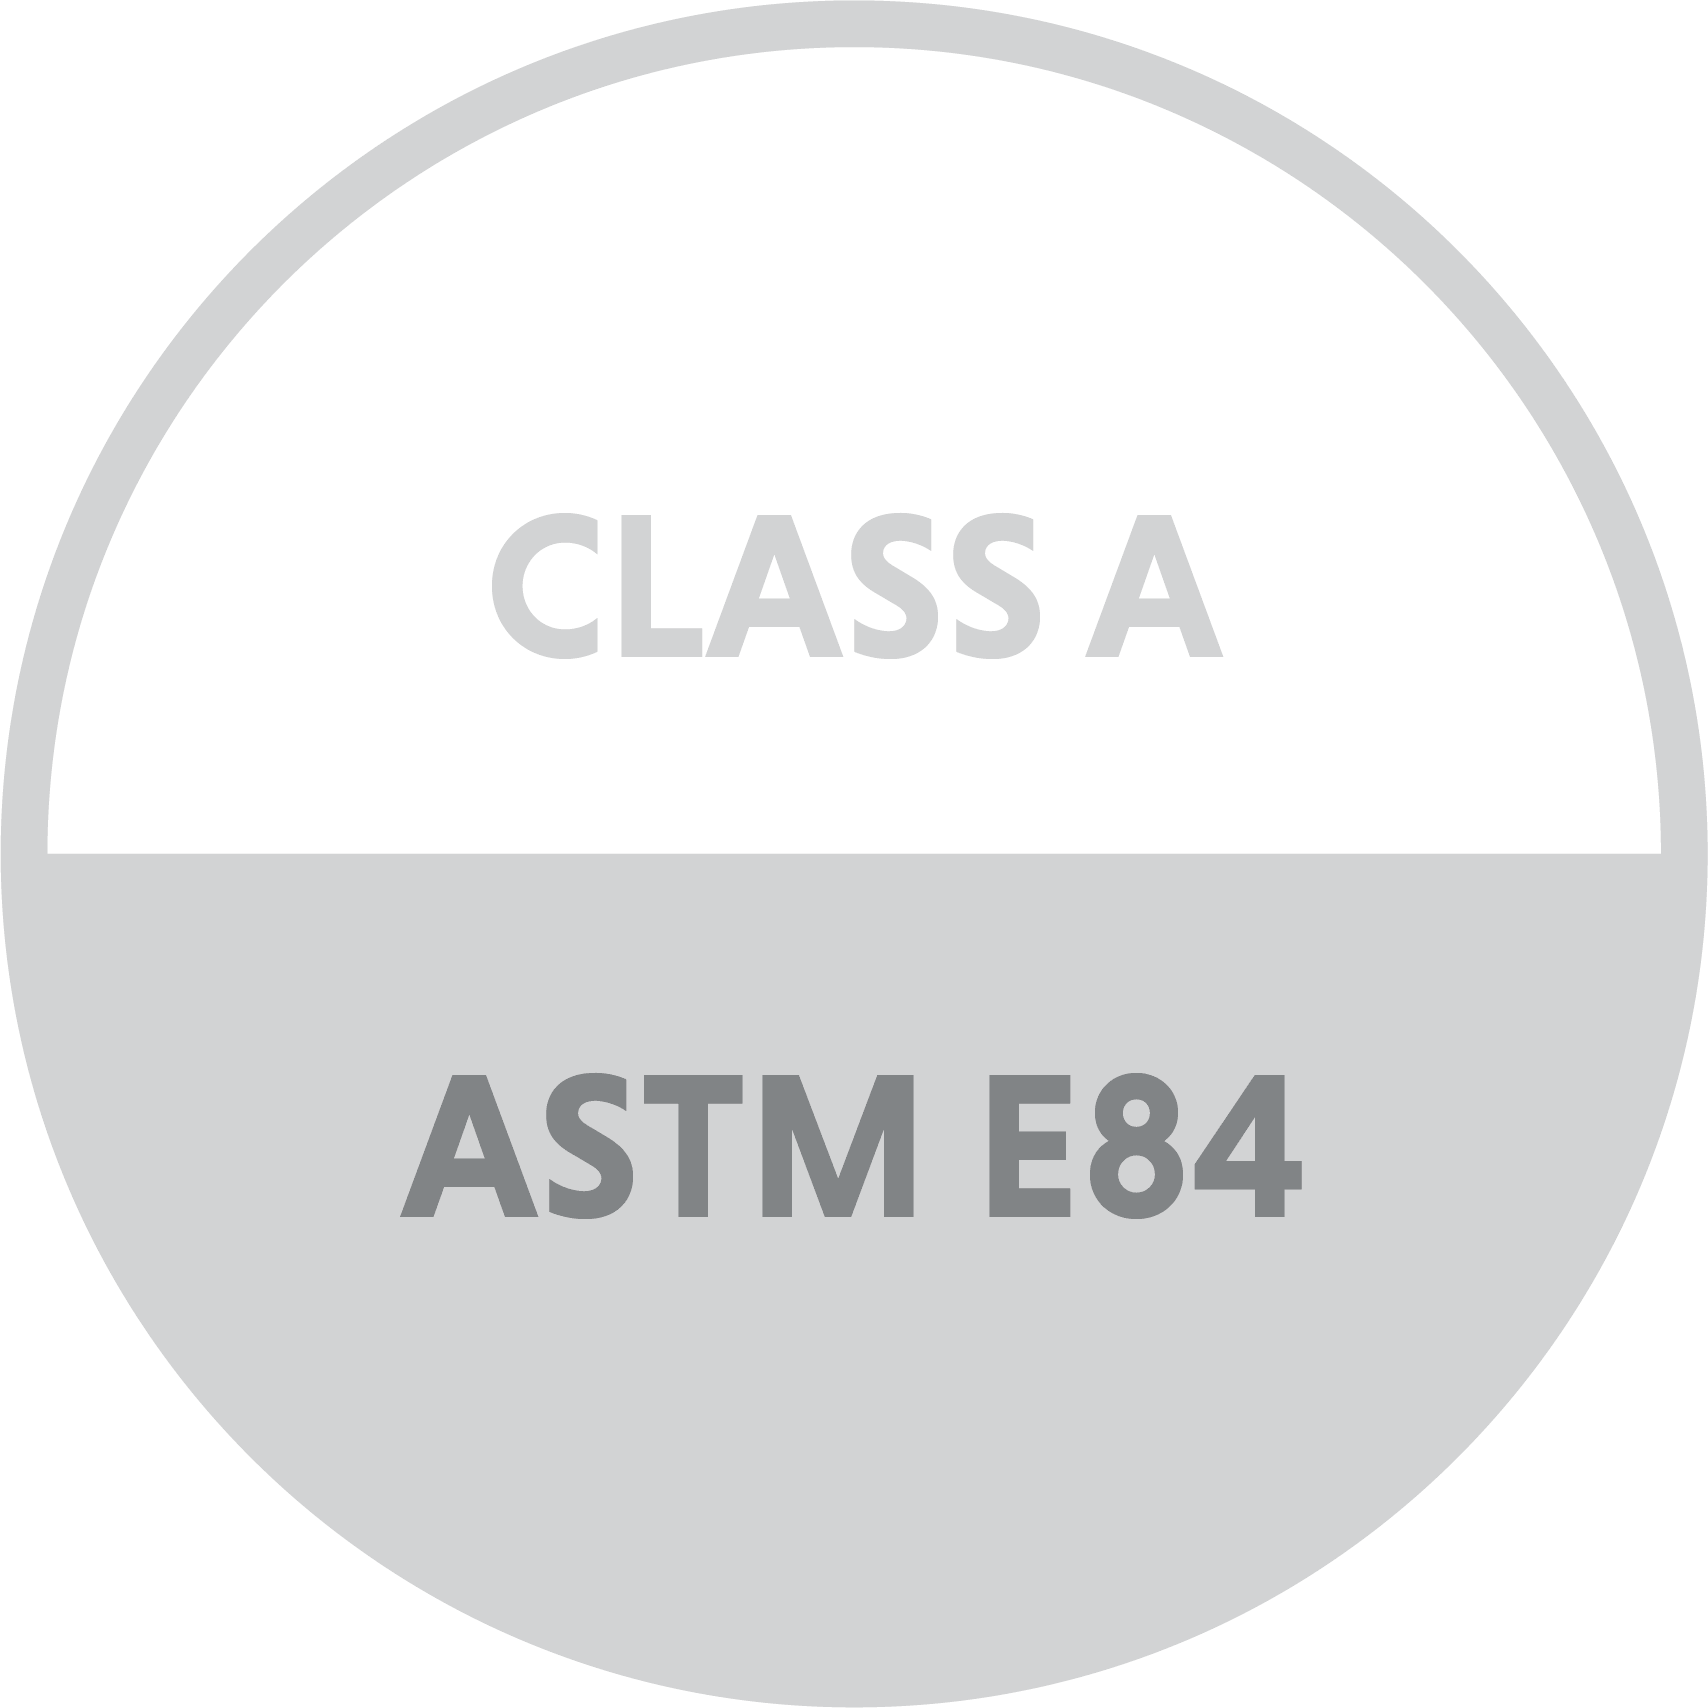 Astm E84 / class A